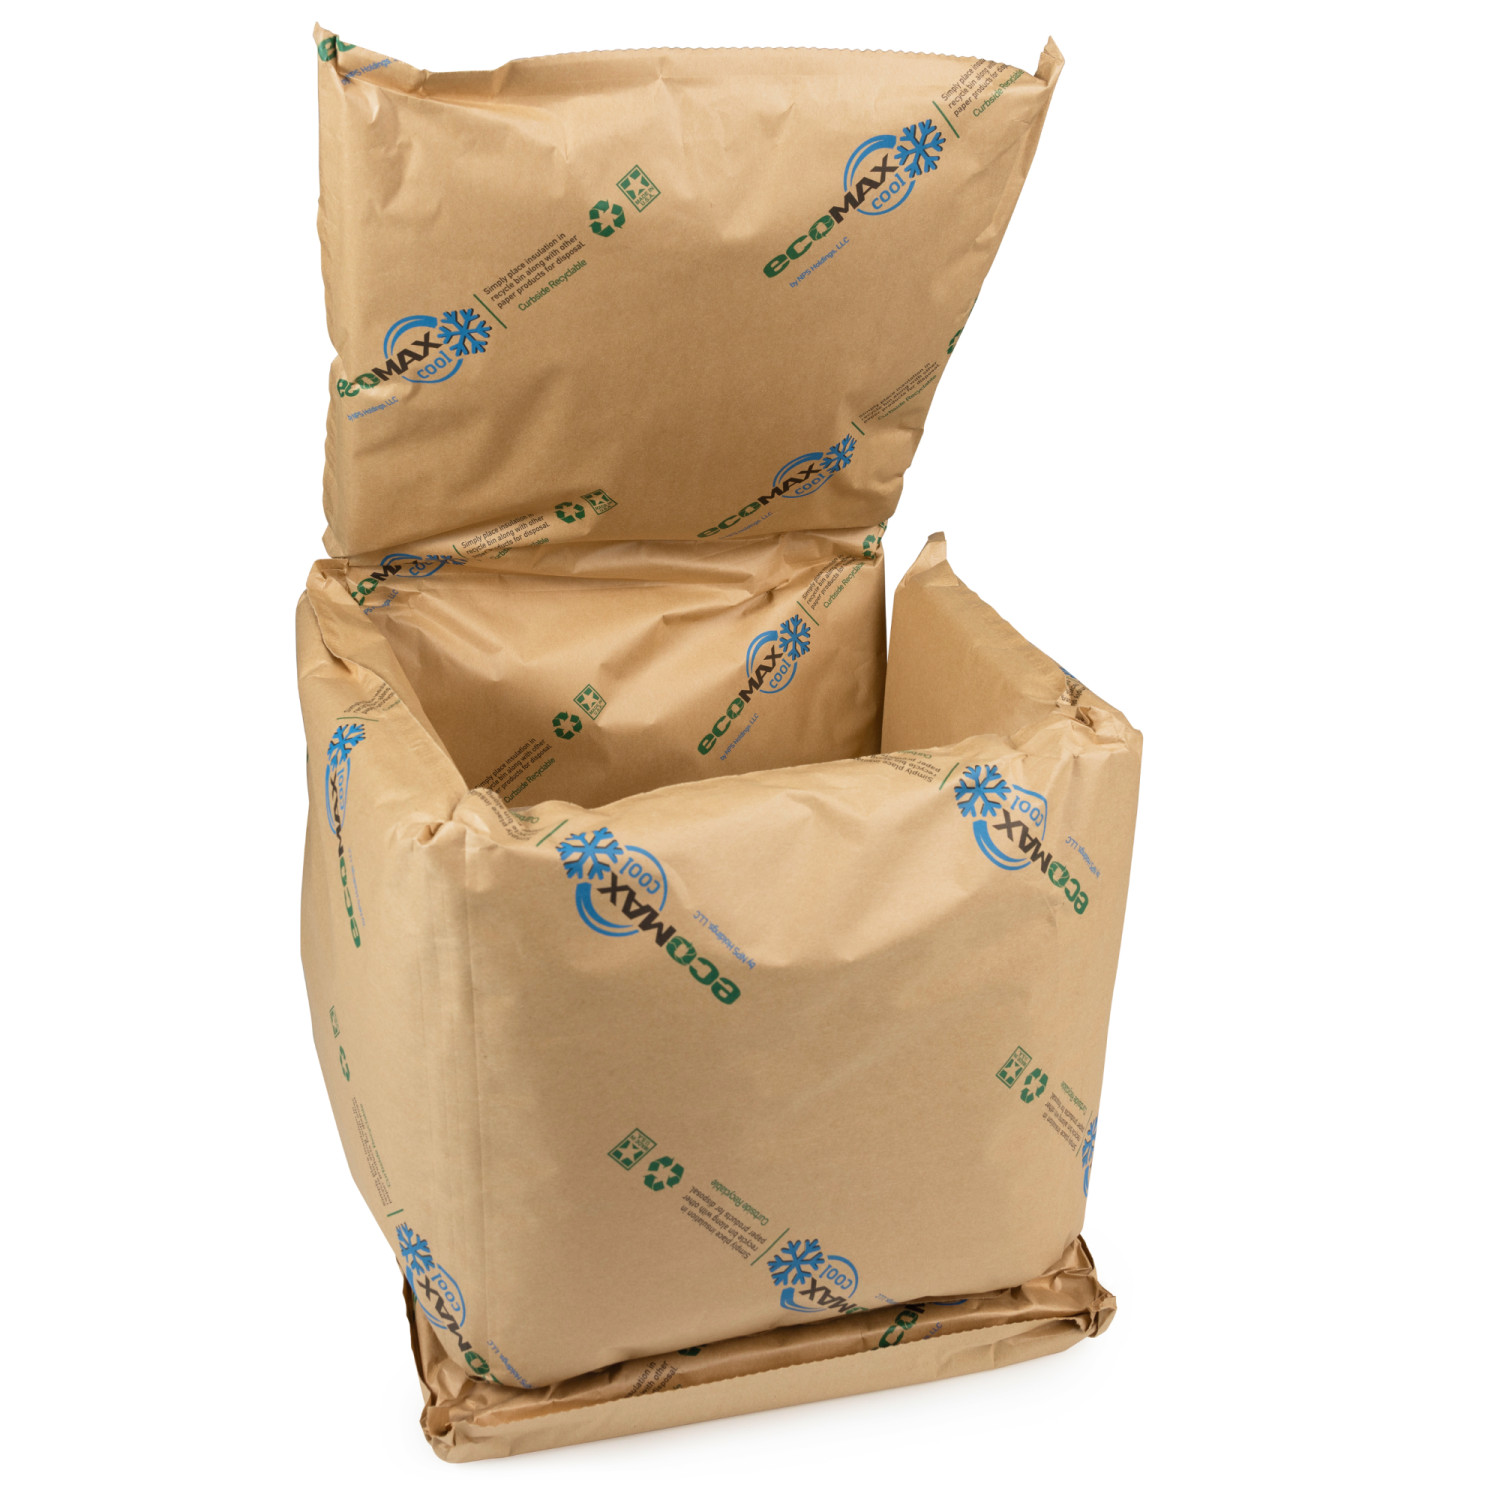 6 x 8 Small Heavy Duty Clear Vacuum Sealer Bags buy in stock in U.S. in  IDL Packaging